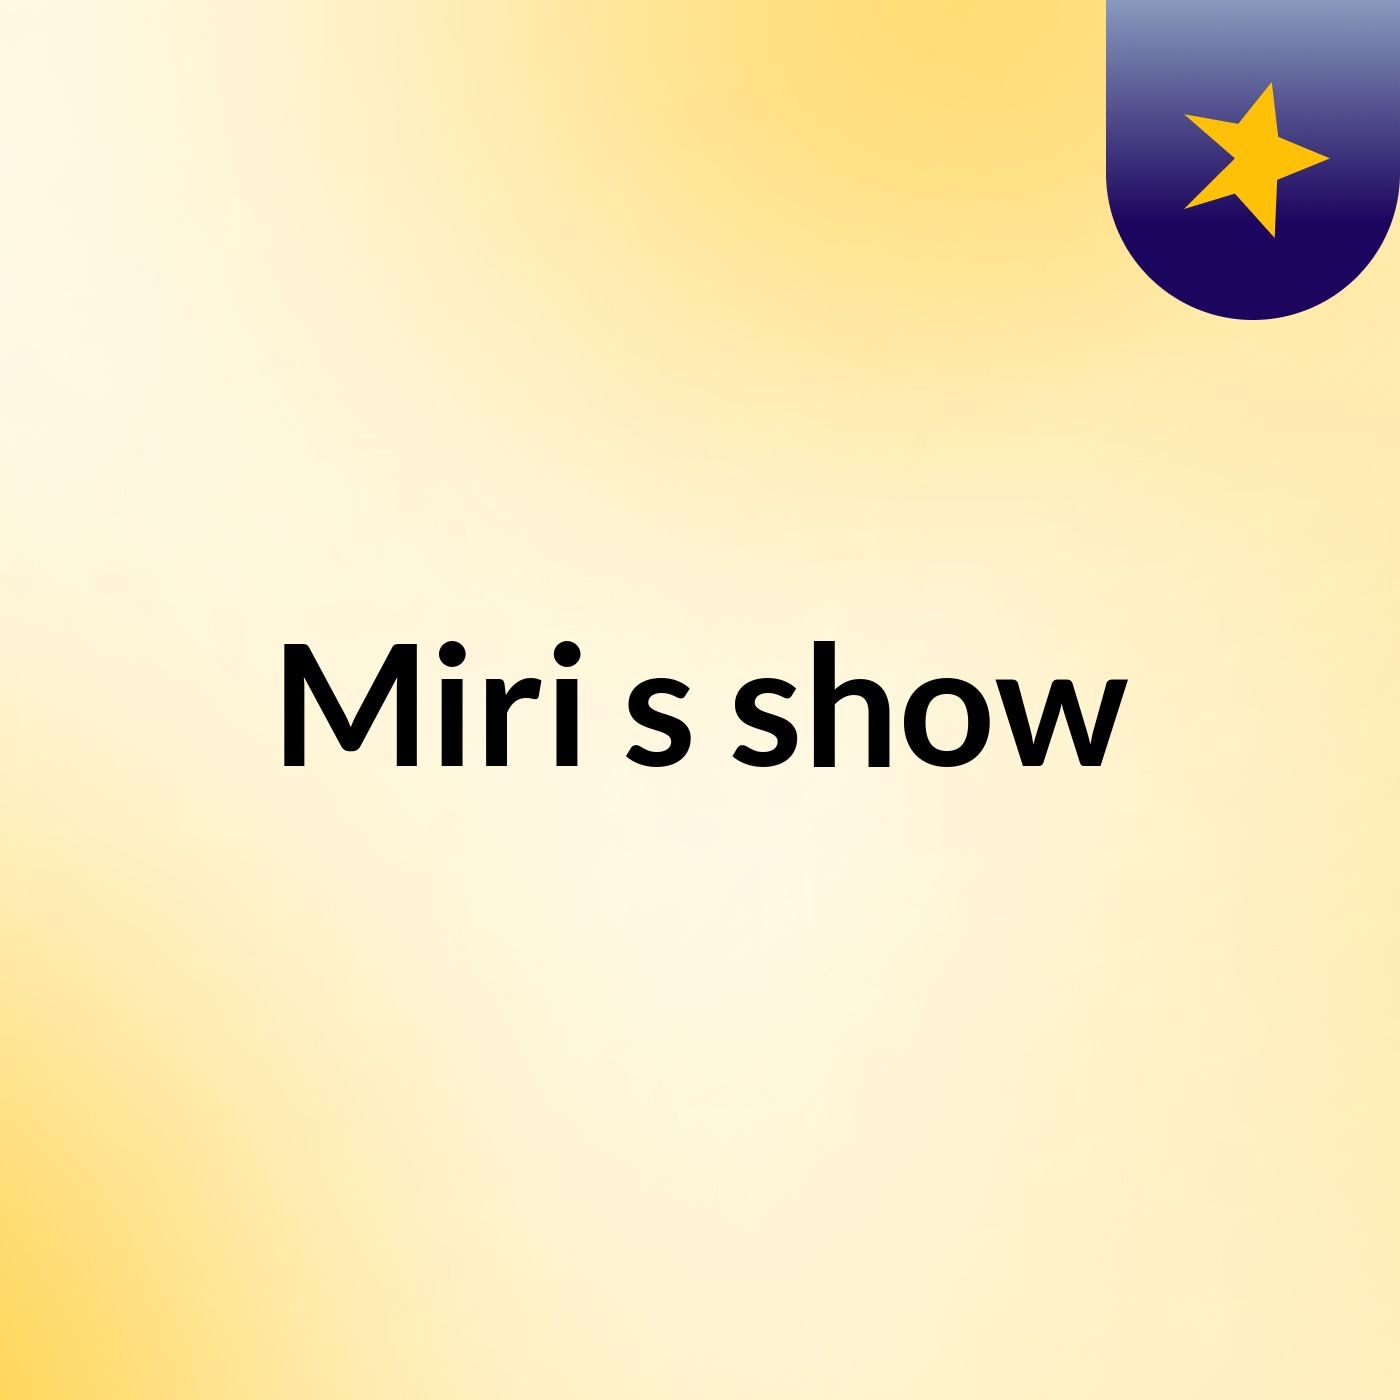 Miri's show